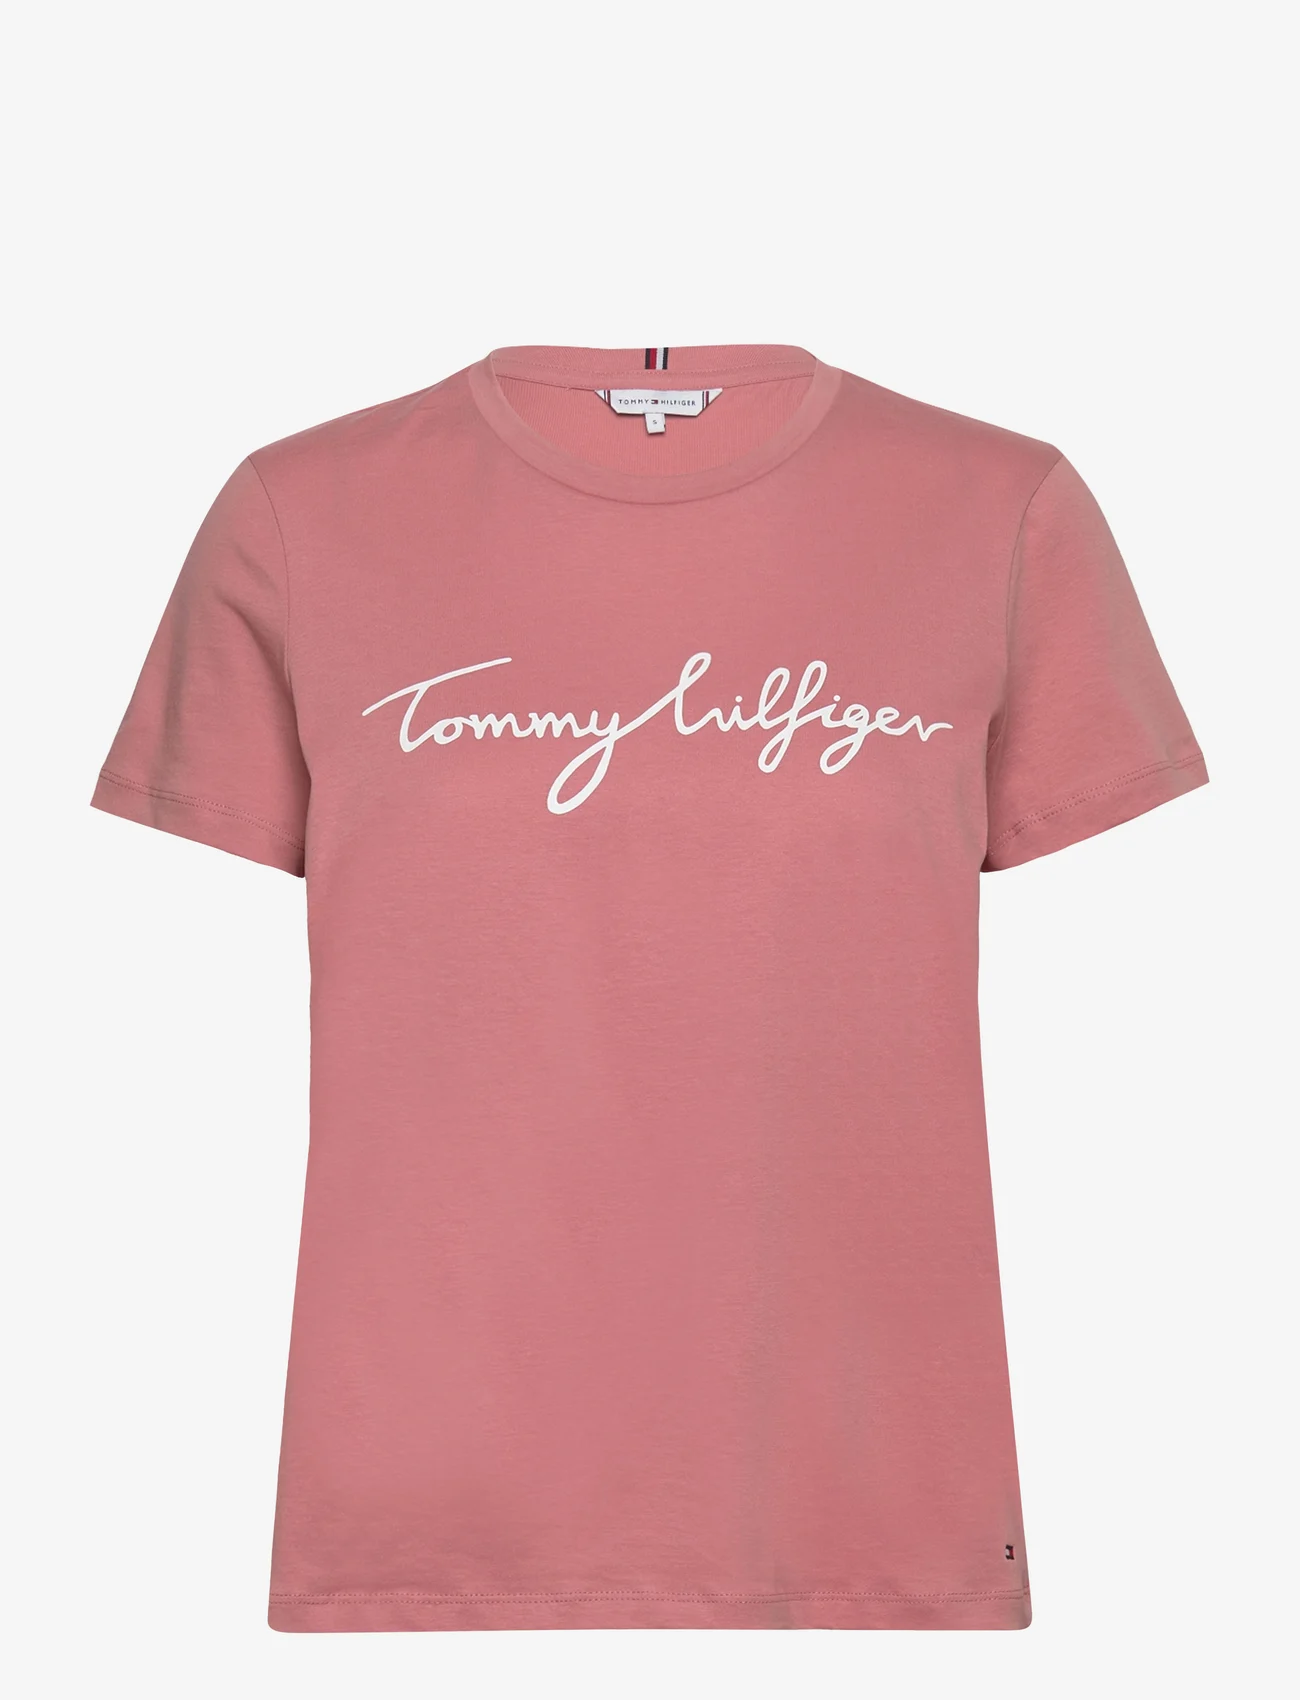 Tommy Hilfiger - REG C-NK SIGNATURE TEE SS - t-skjorter - teaberry blossom - 0